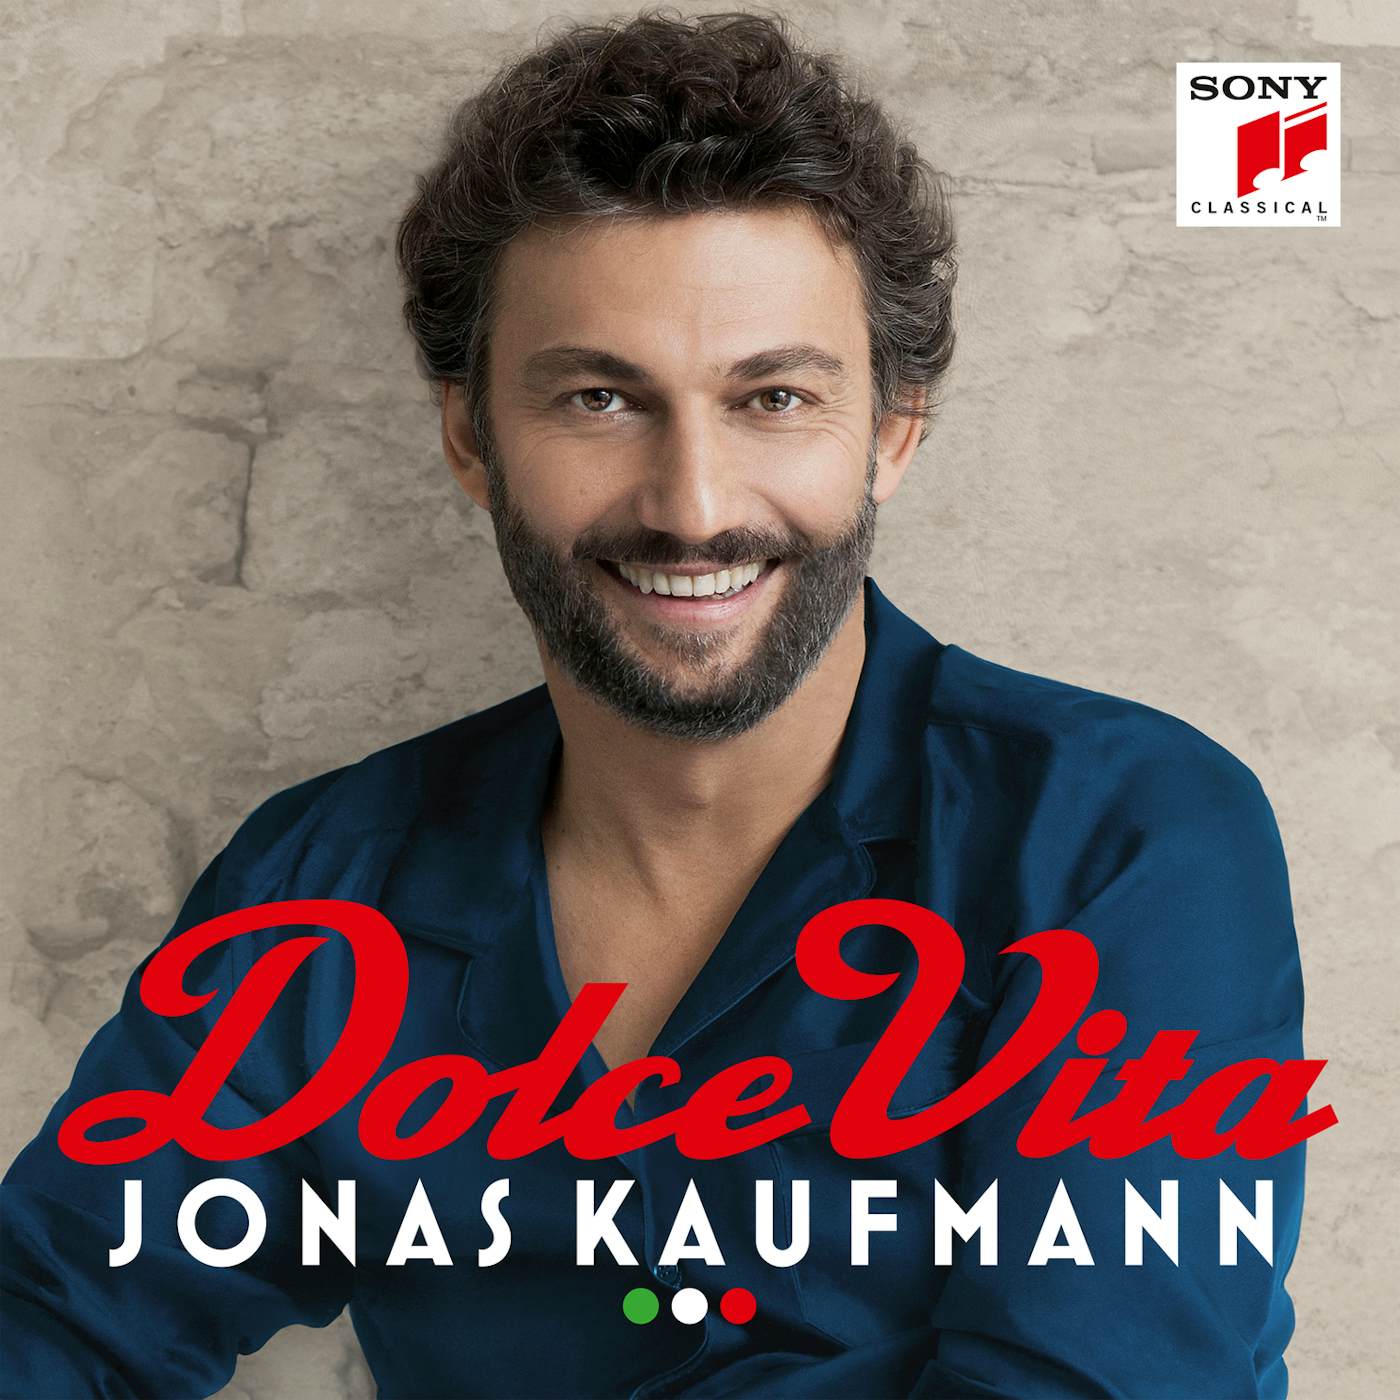 Jonas Kaufmann Dolce Vita Vinyl Record